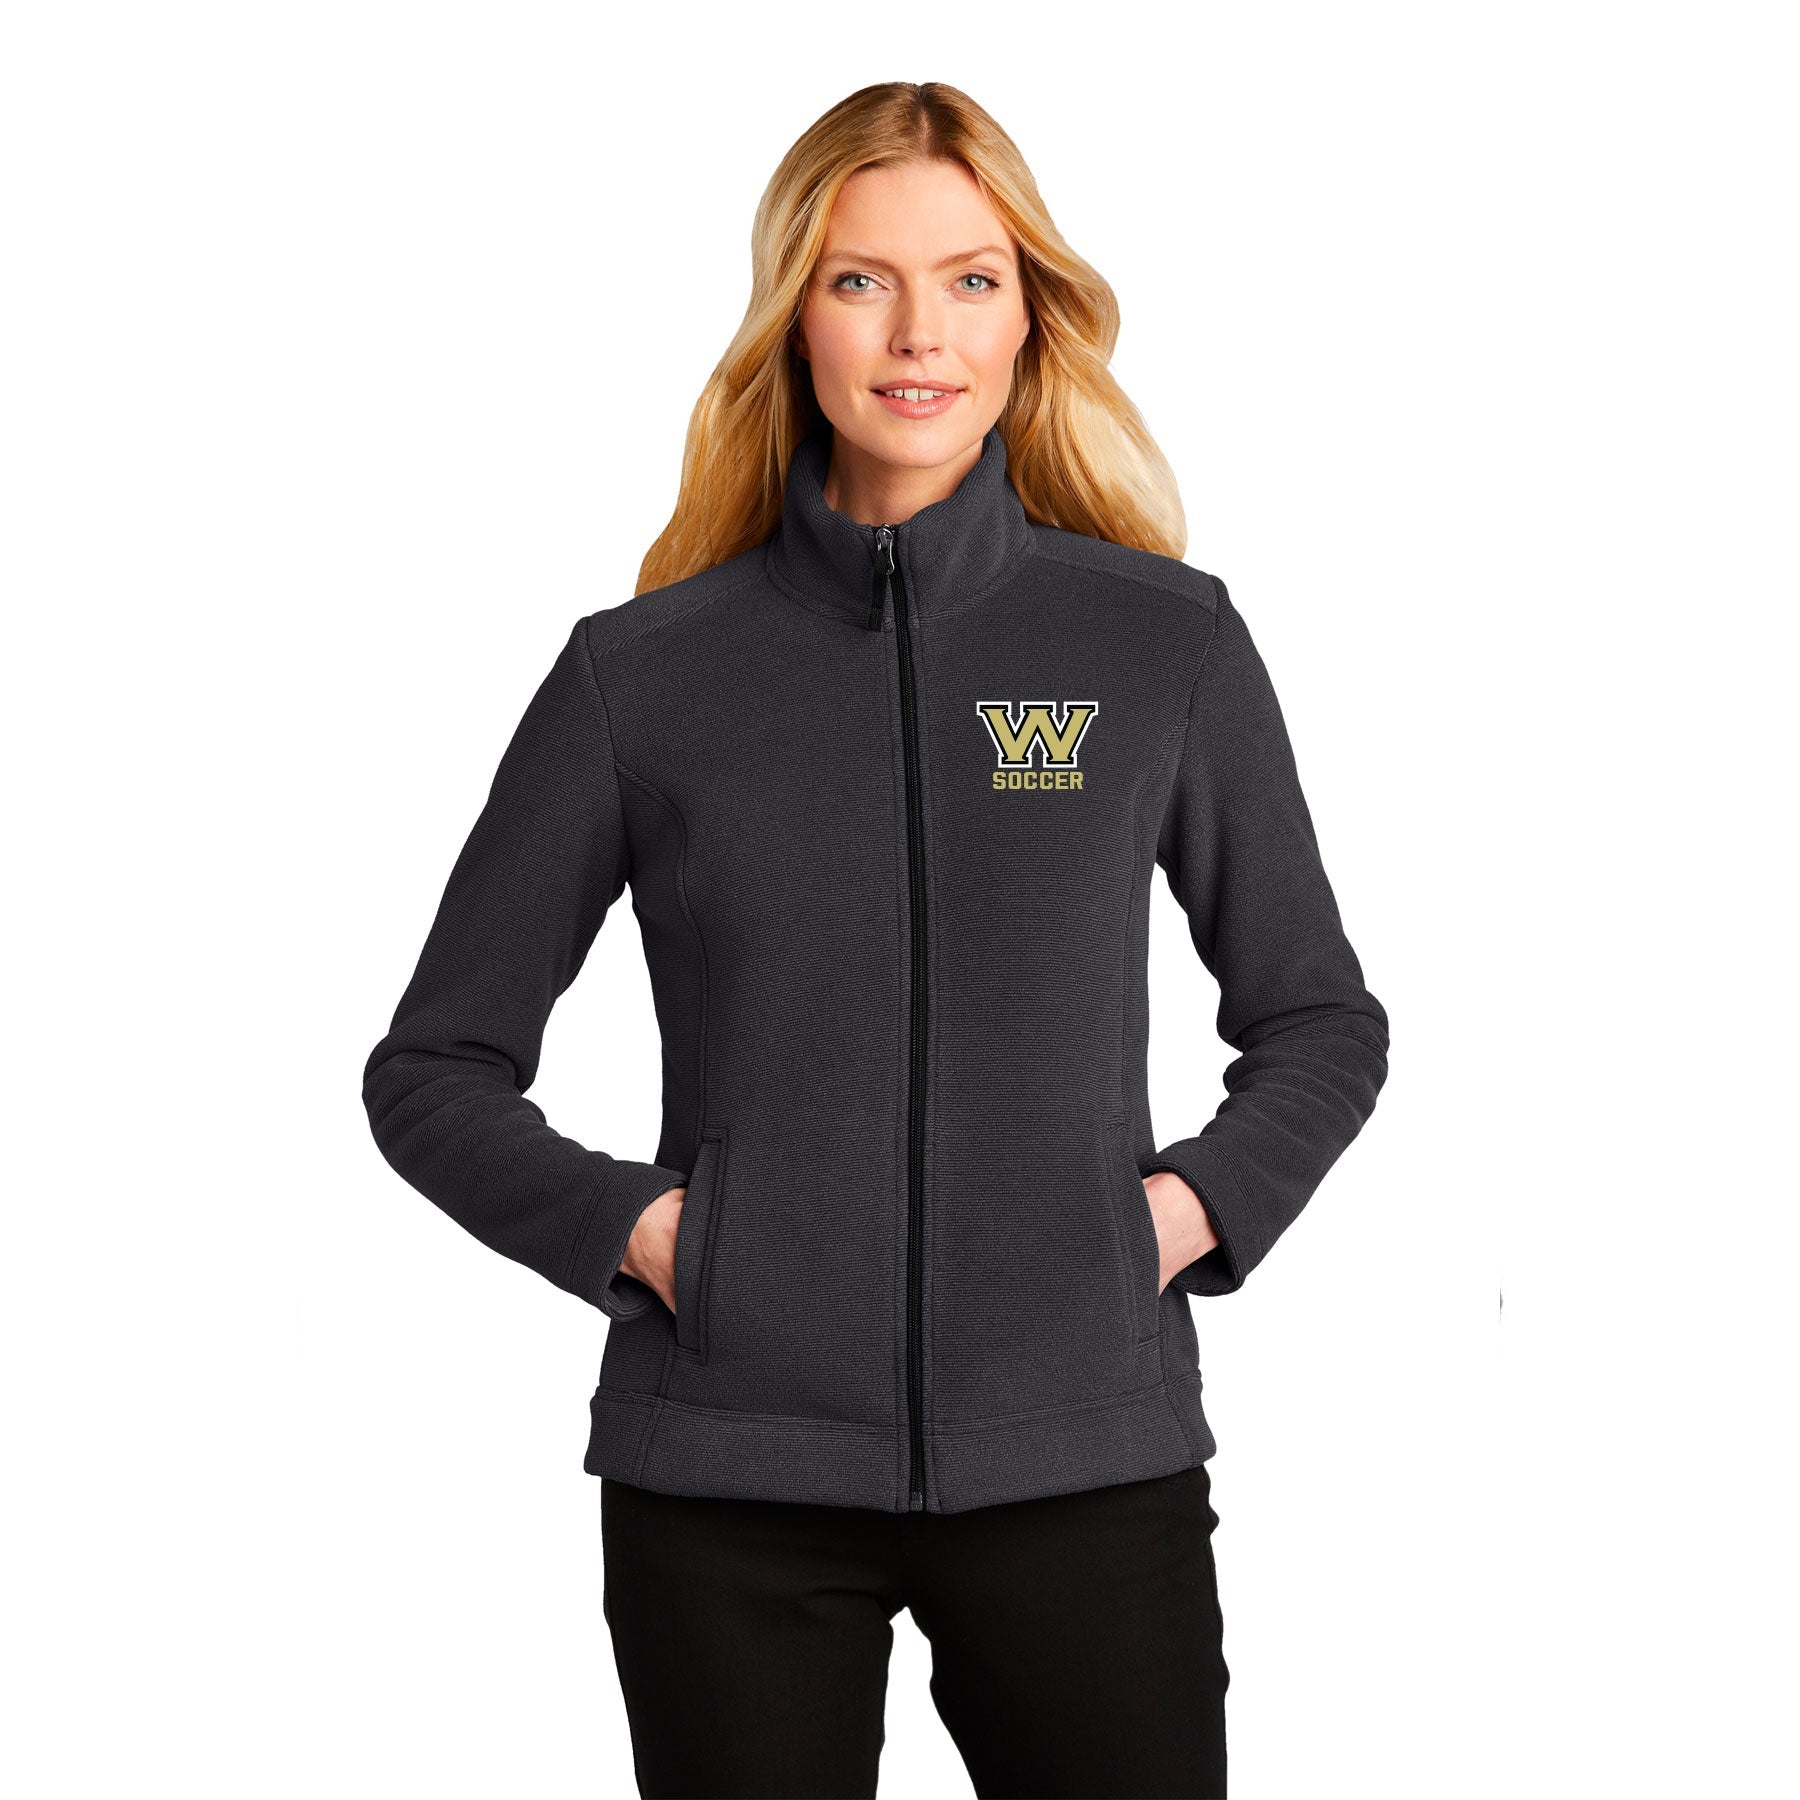 L211 Ladies Ultra Warm Brushed Fleece Jacket custom embroidered or